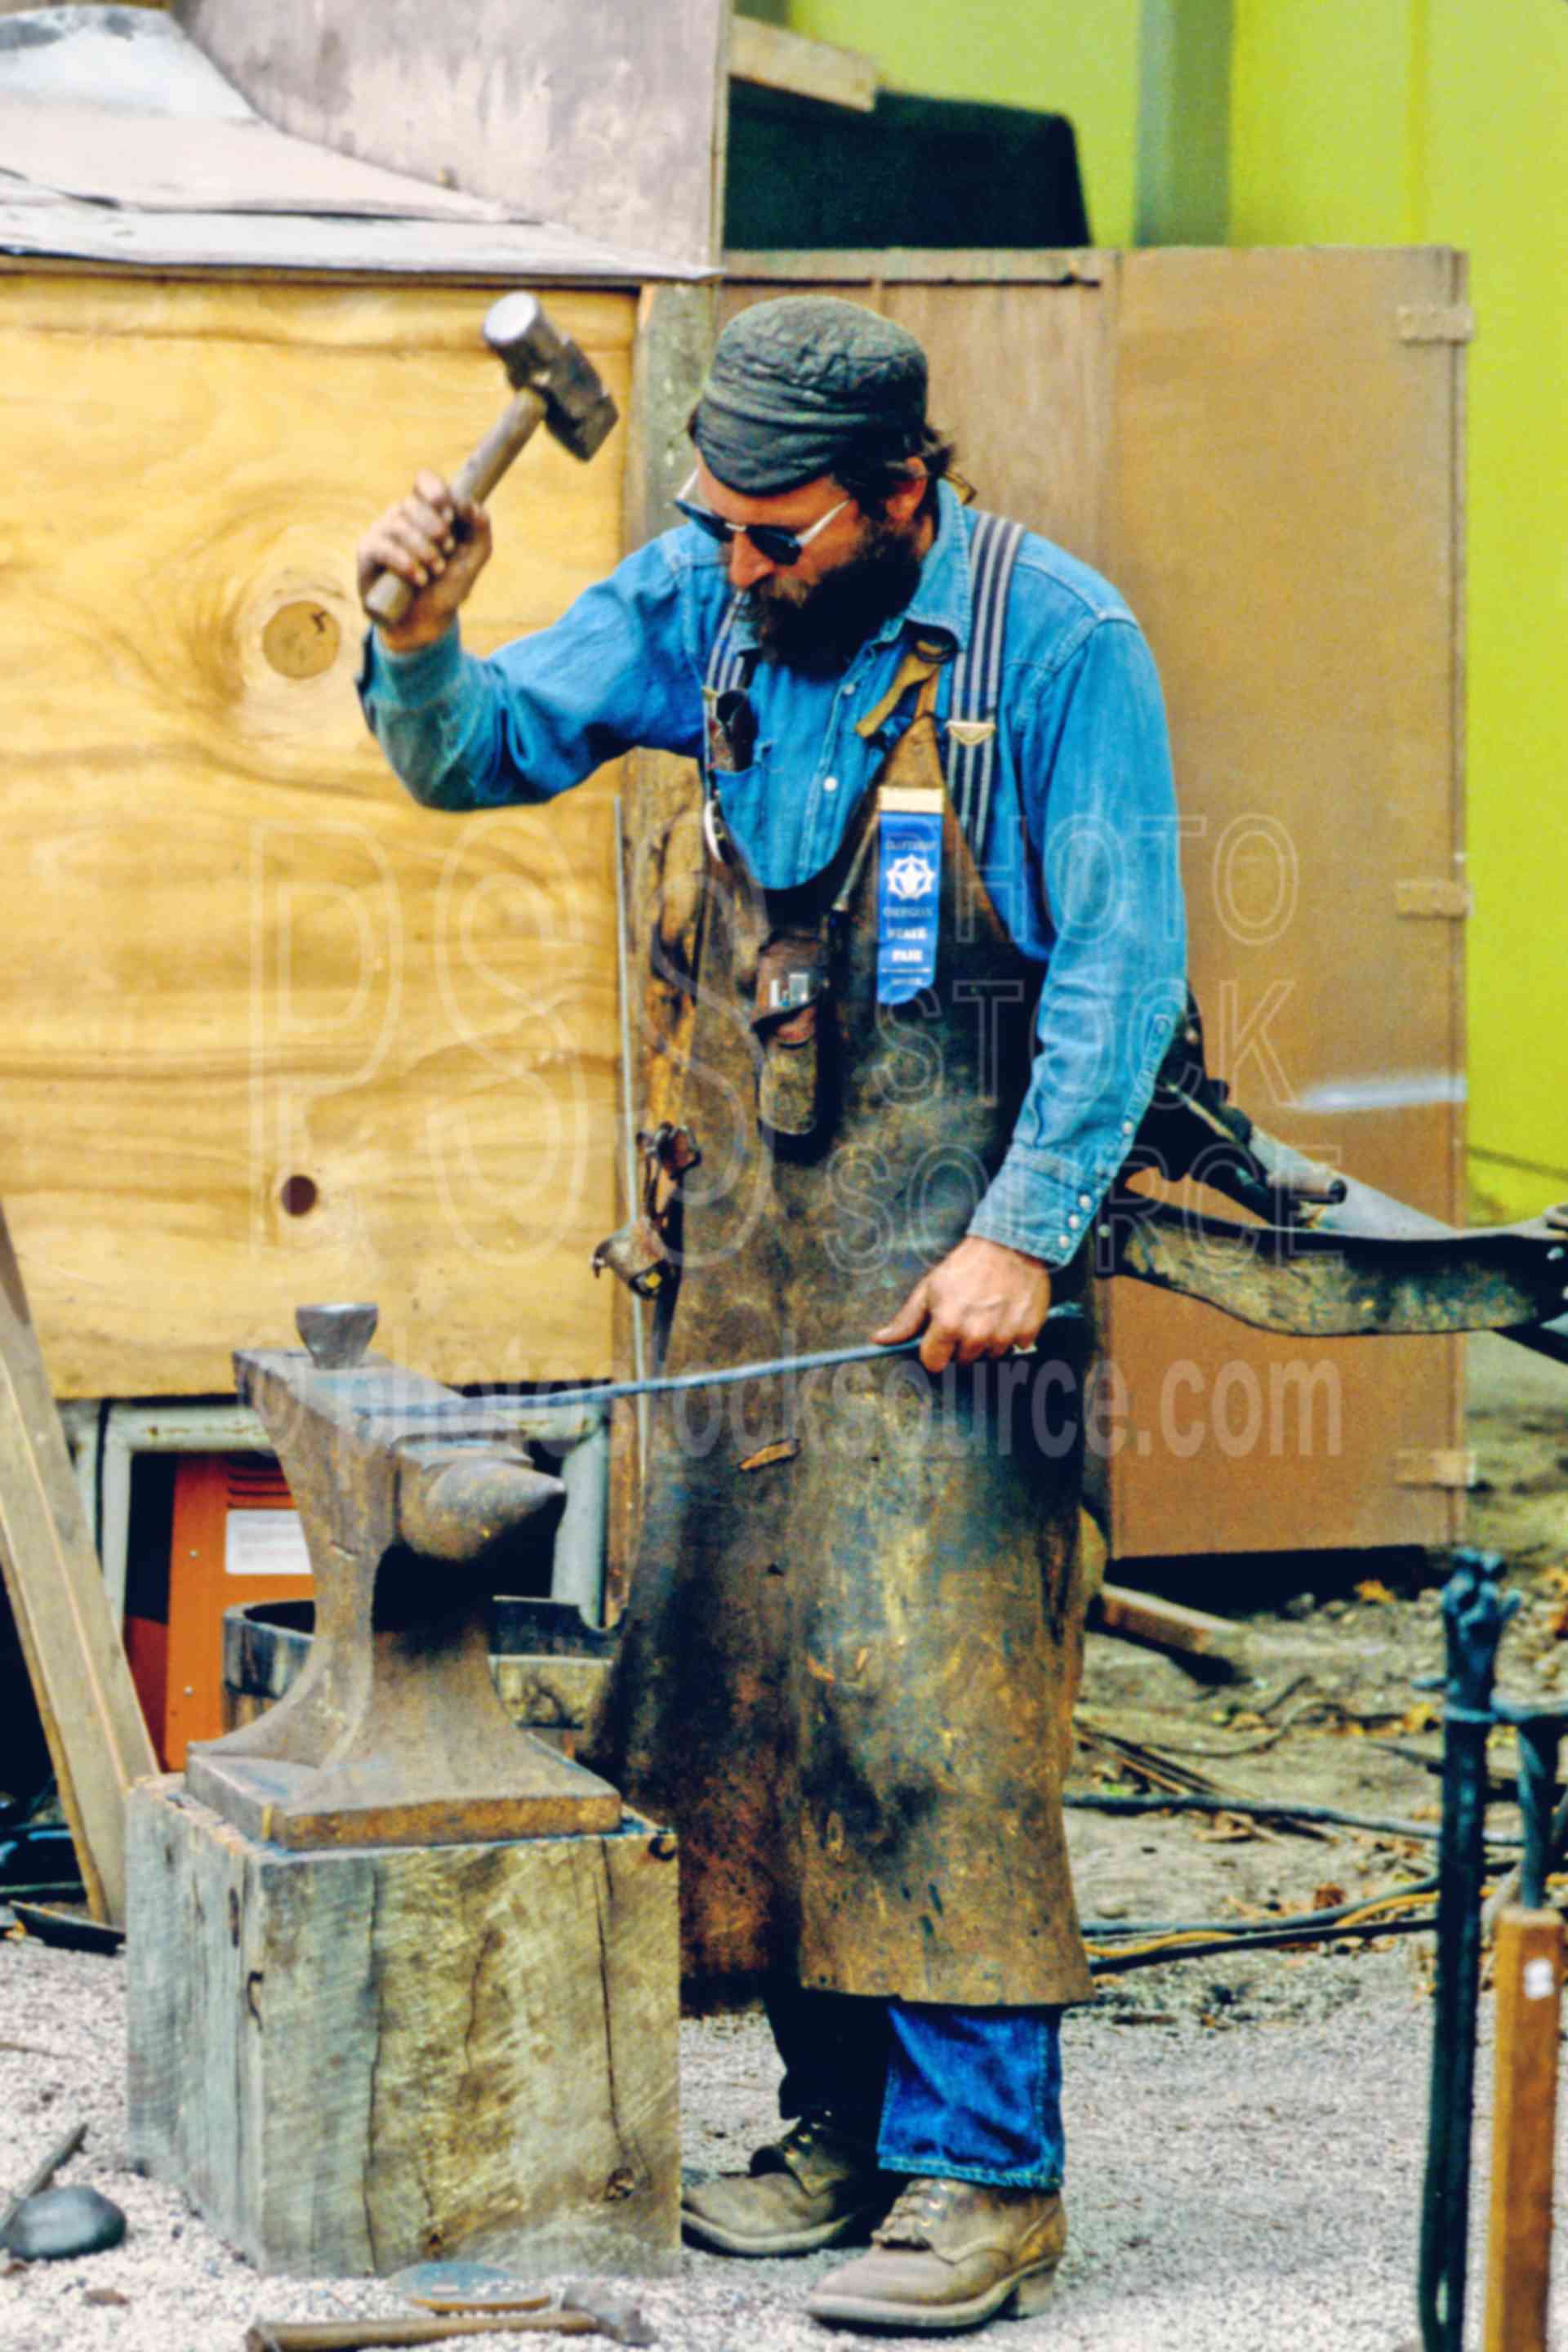 Blacksmith,work,worker,hammer,anvil,tools instruments